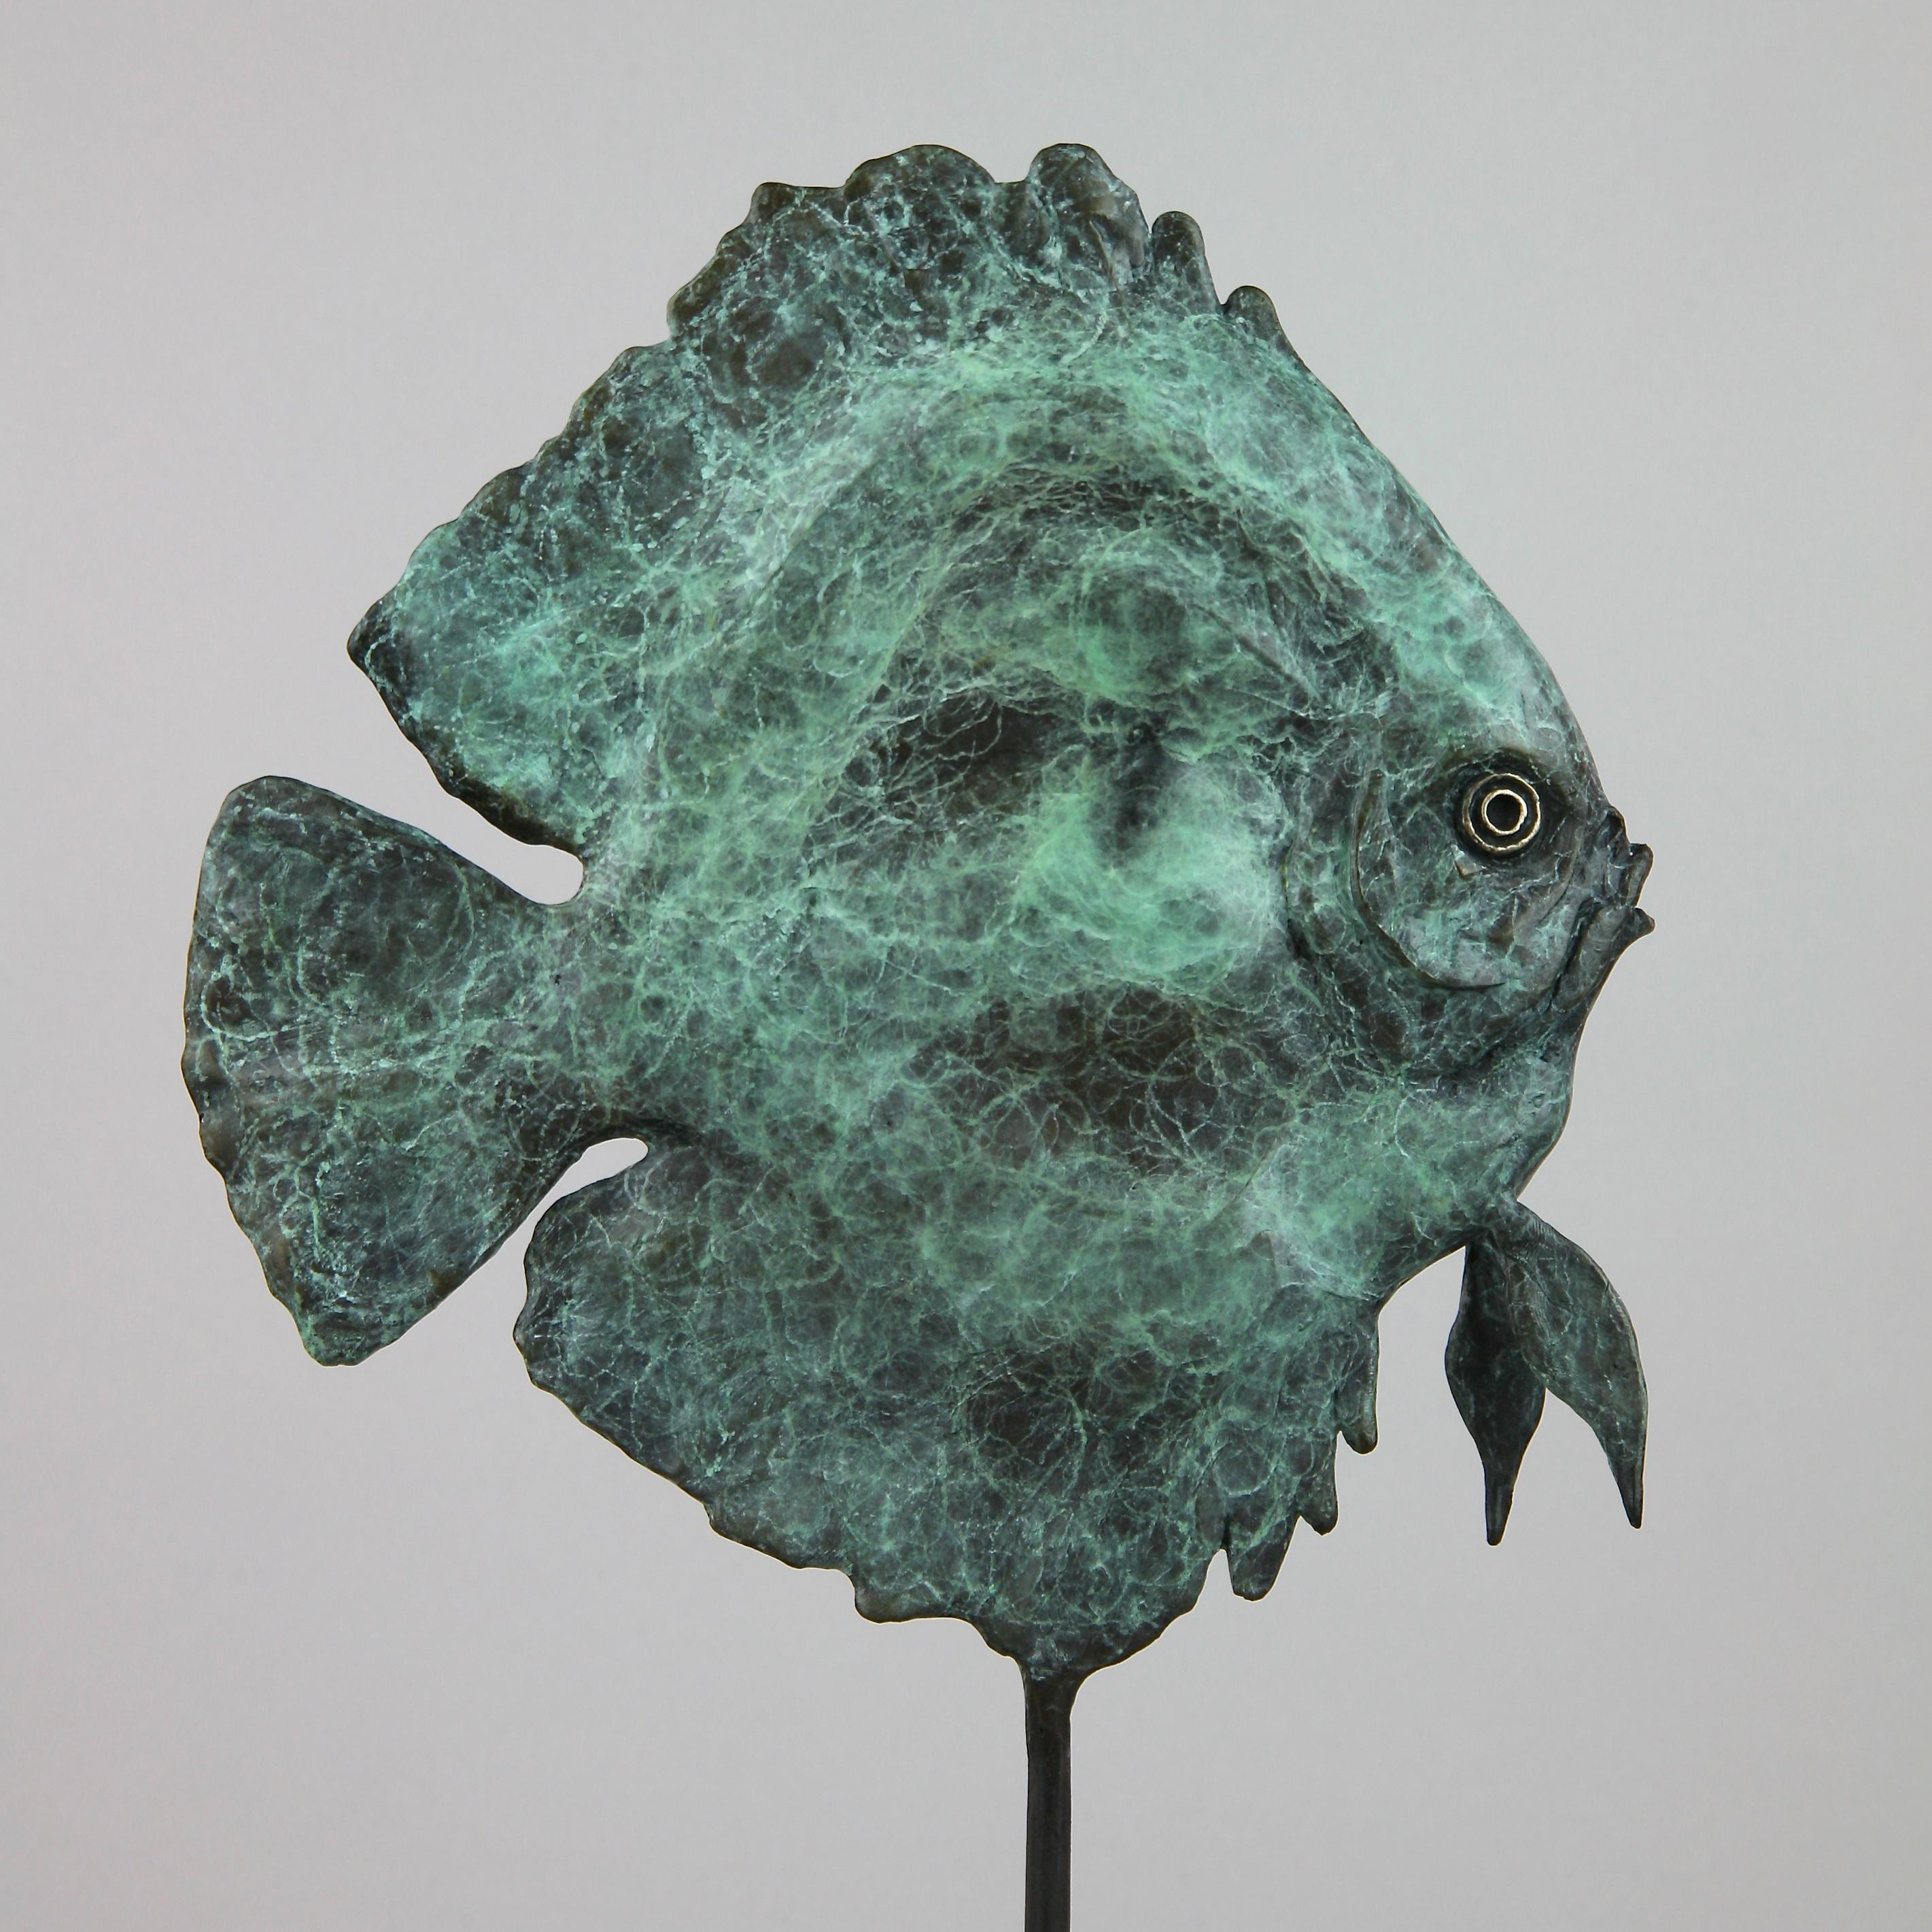 Andrzej Szymczyk Figurative Sculpture - Discus Fish - Wildlife bronze green fish sculpture limited edition modern art